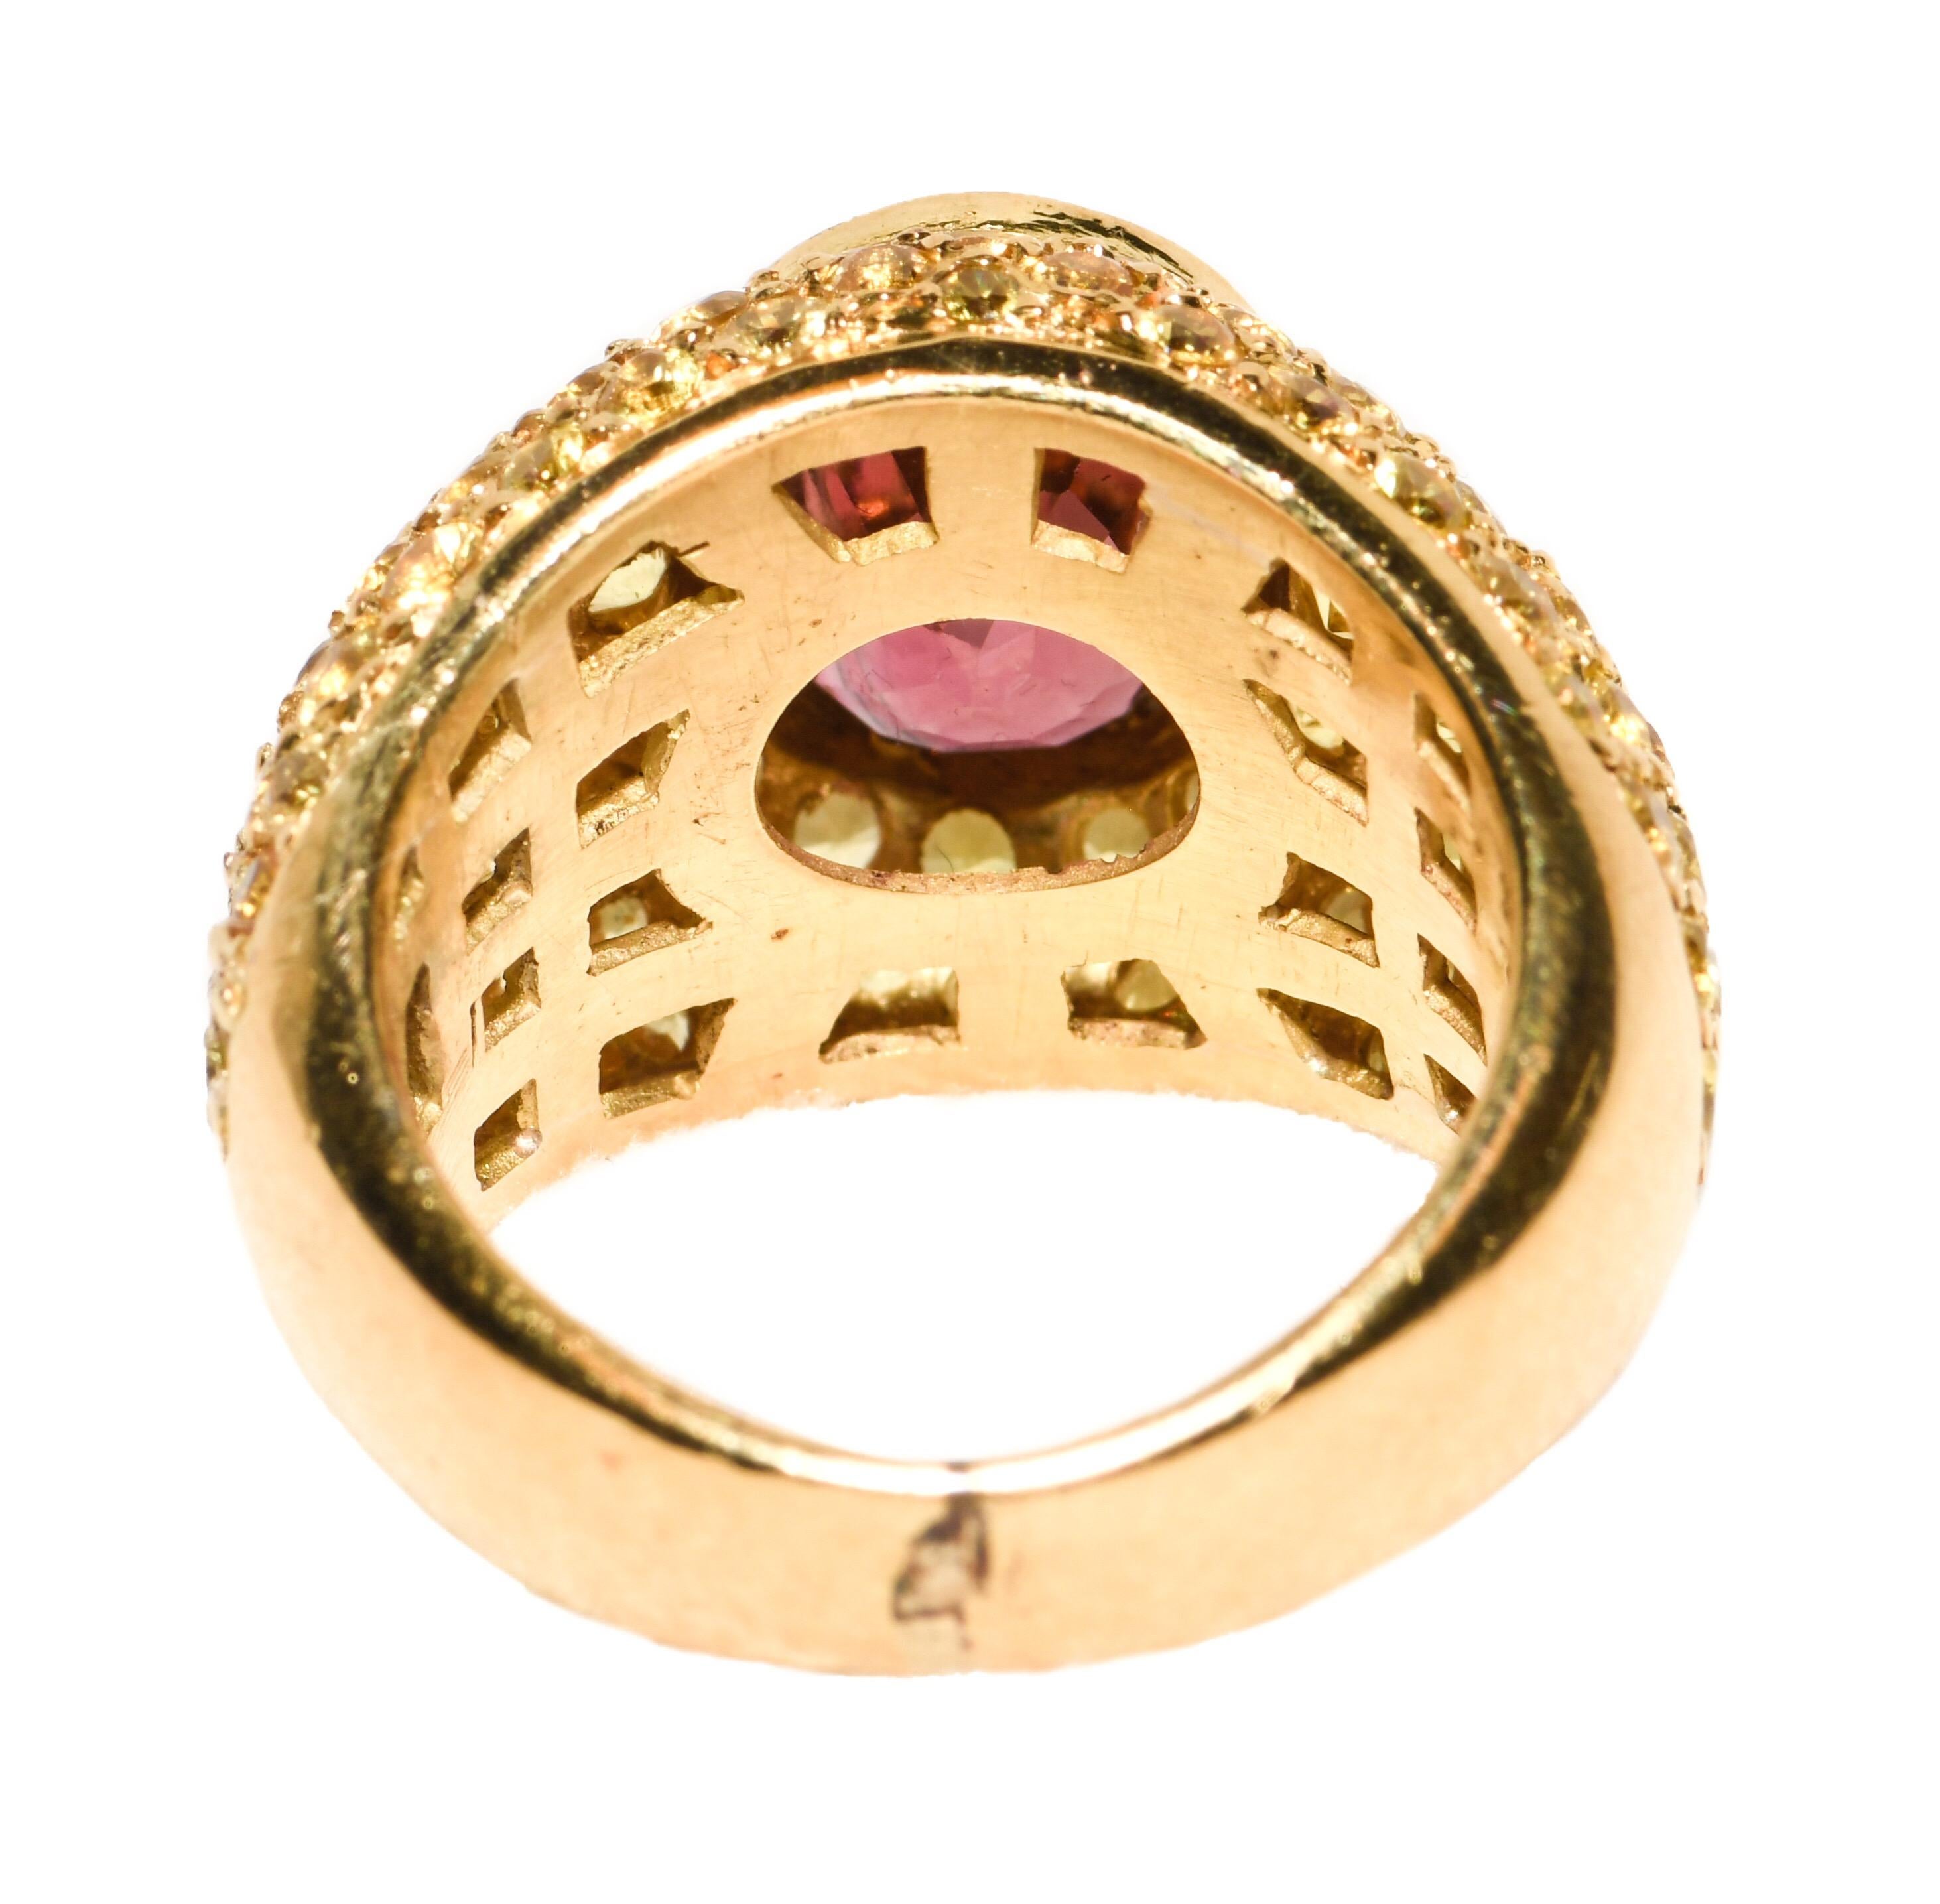 duchess of argyll engagement ring